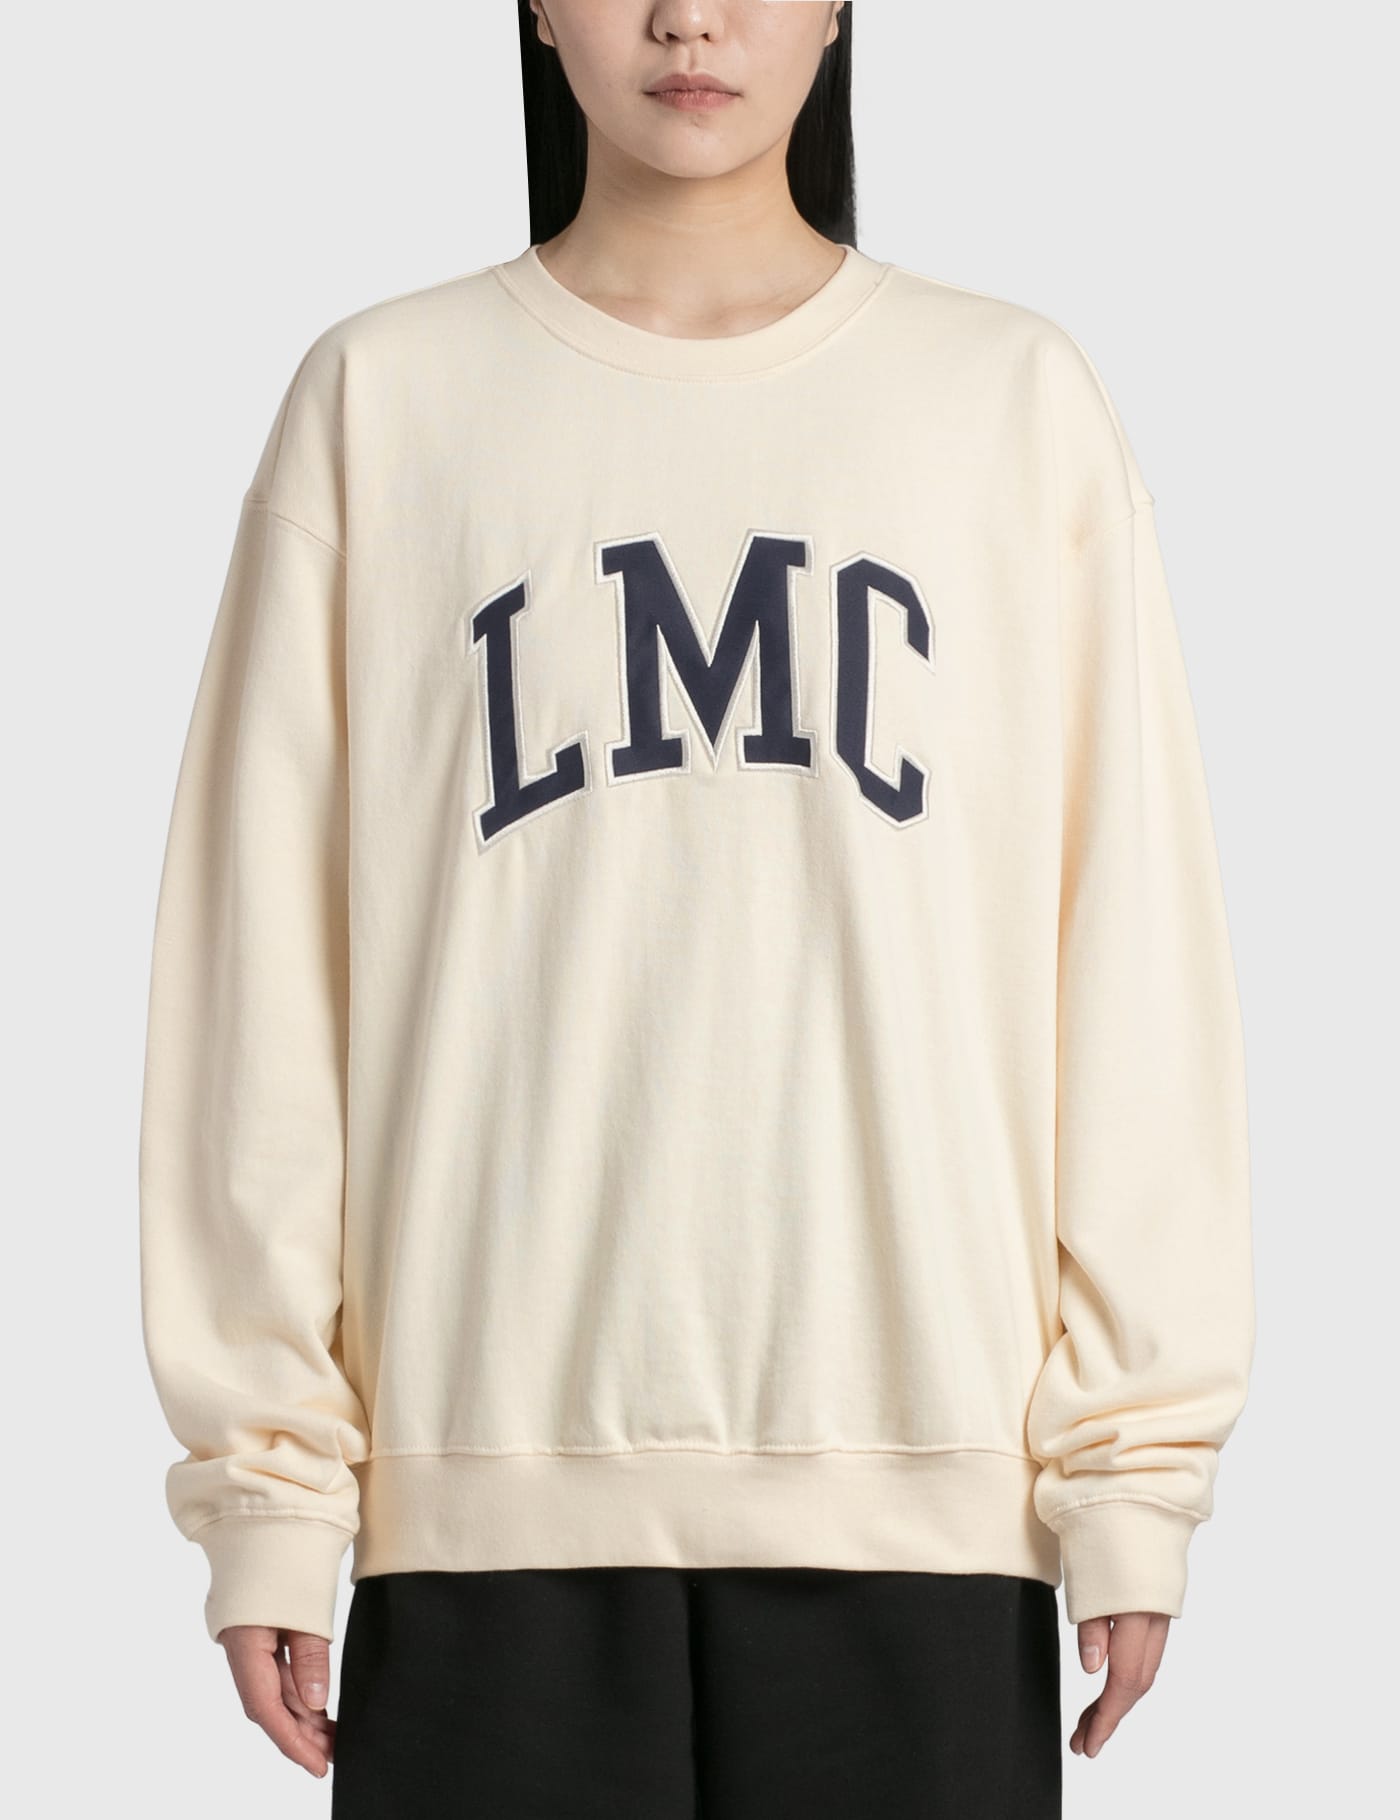 LMC Applique Arch OG Sweatshirt